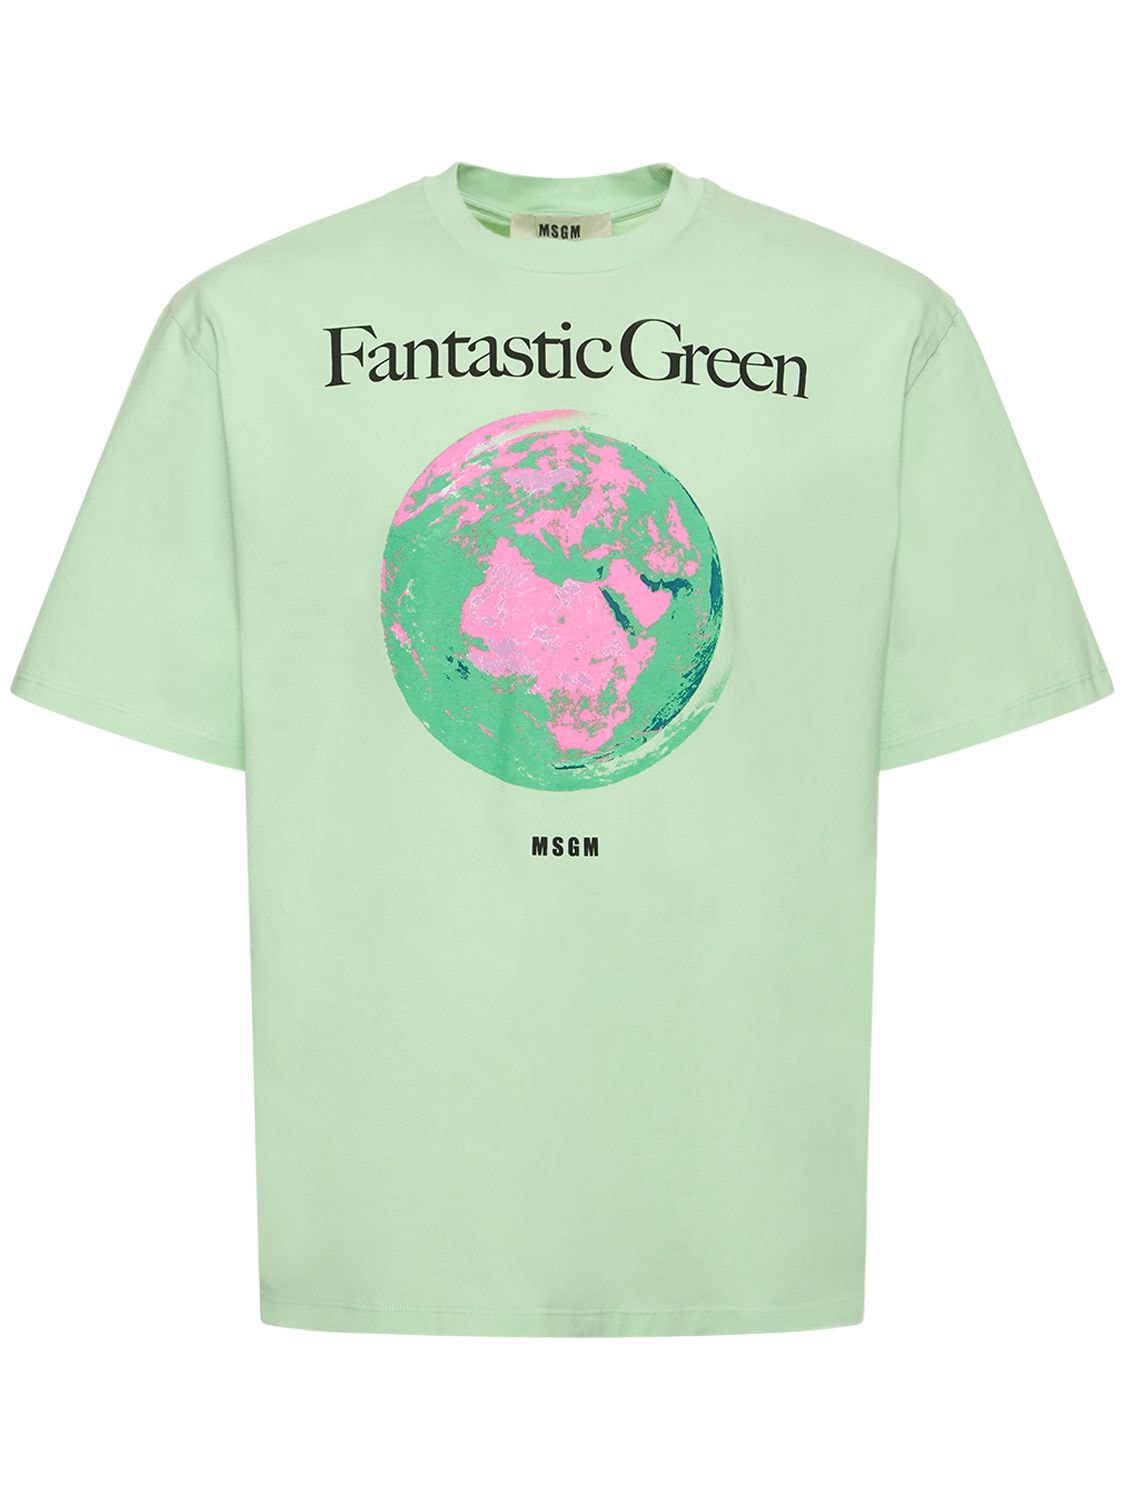 Fantastic Green Organic Cotton T-shirt image